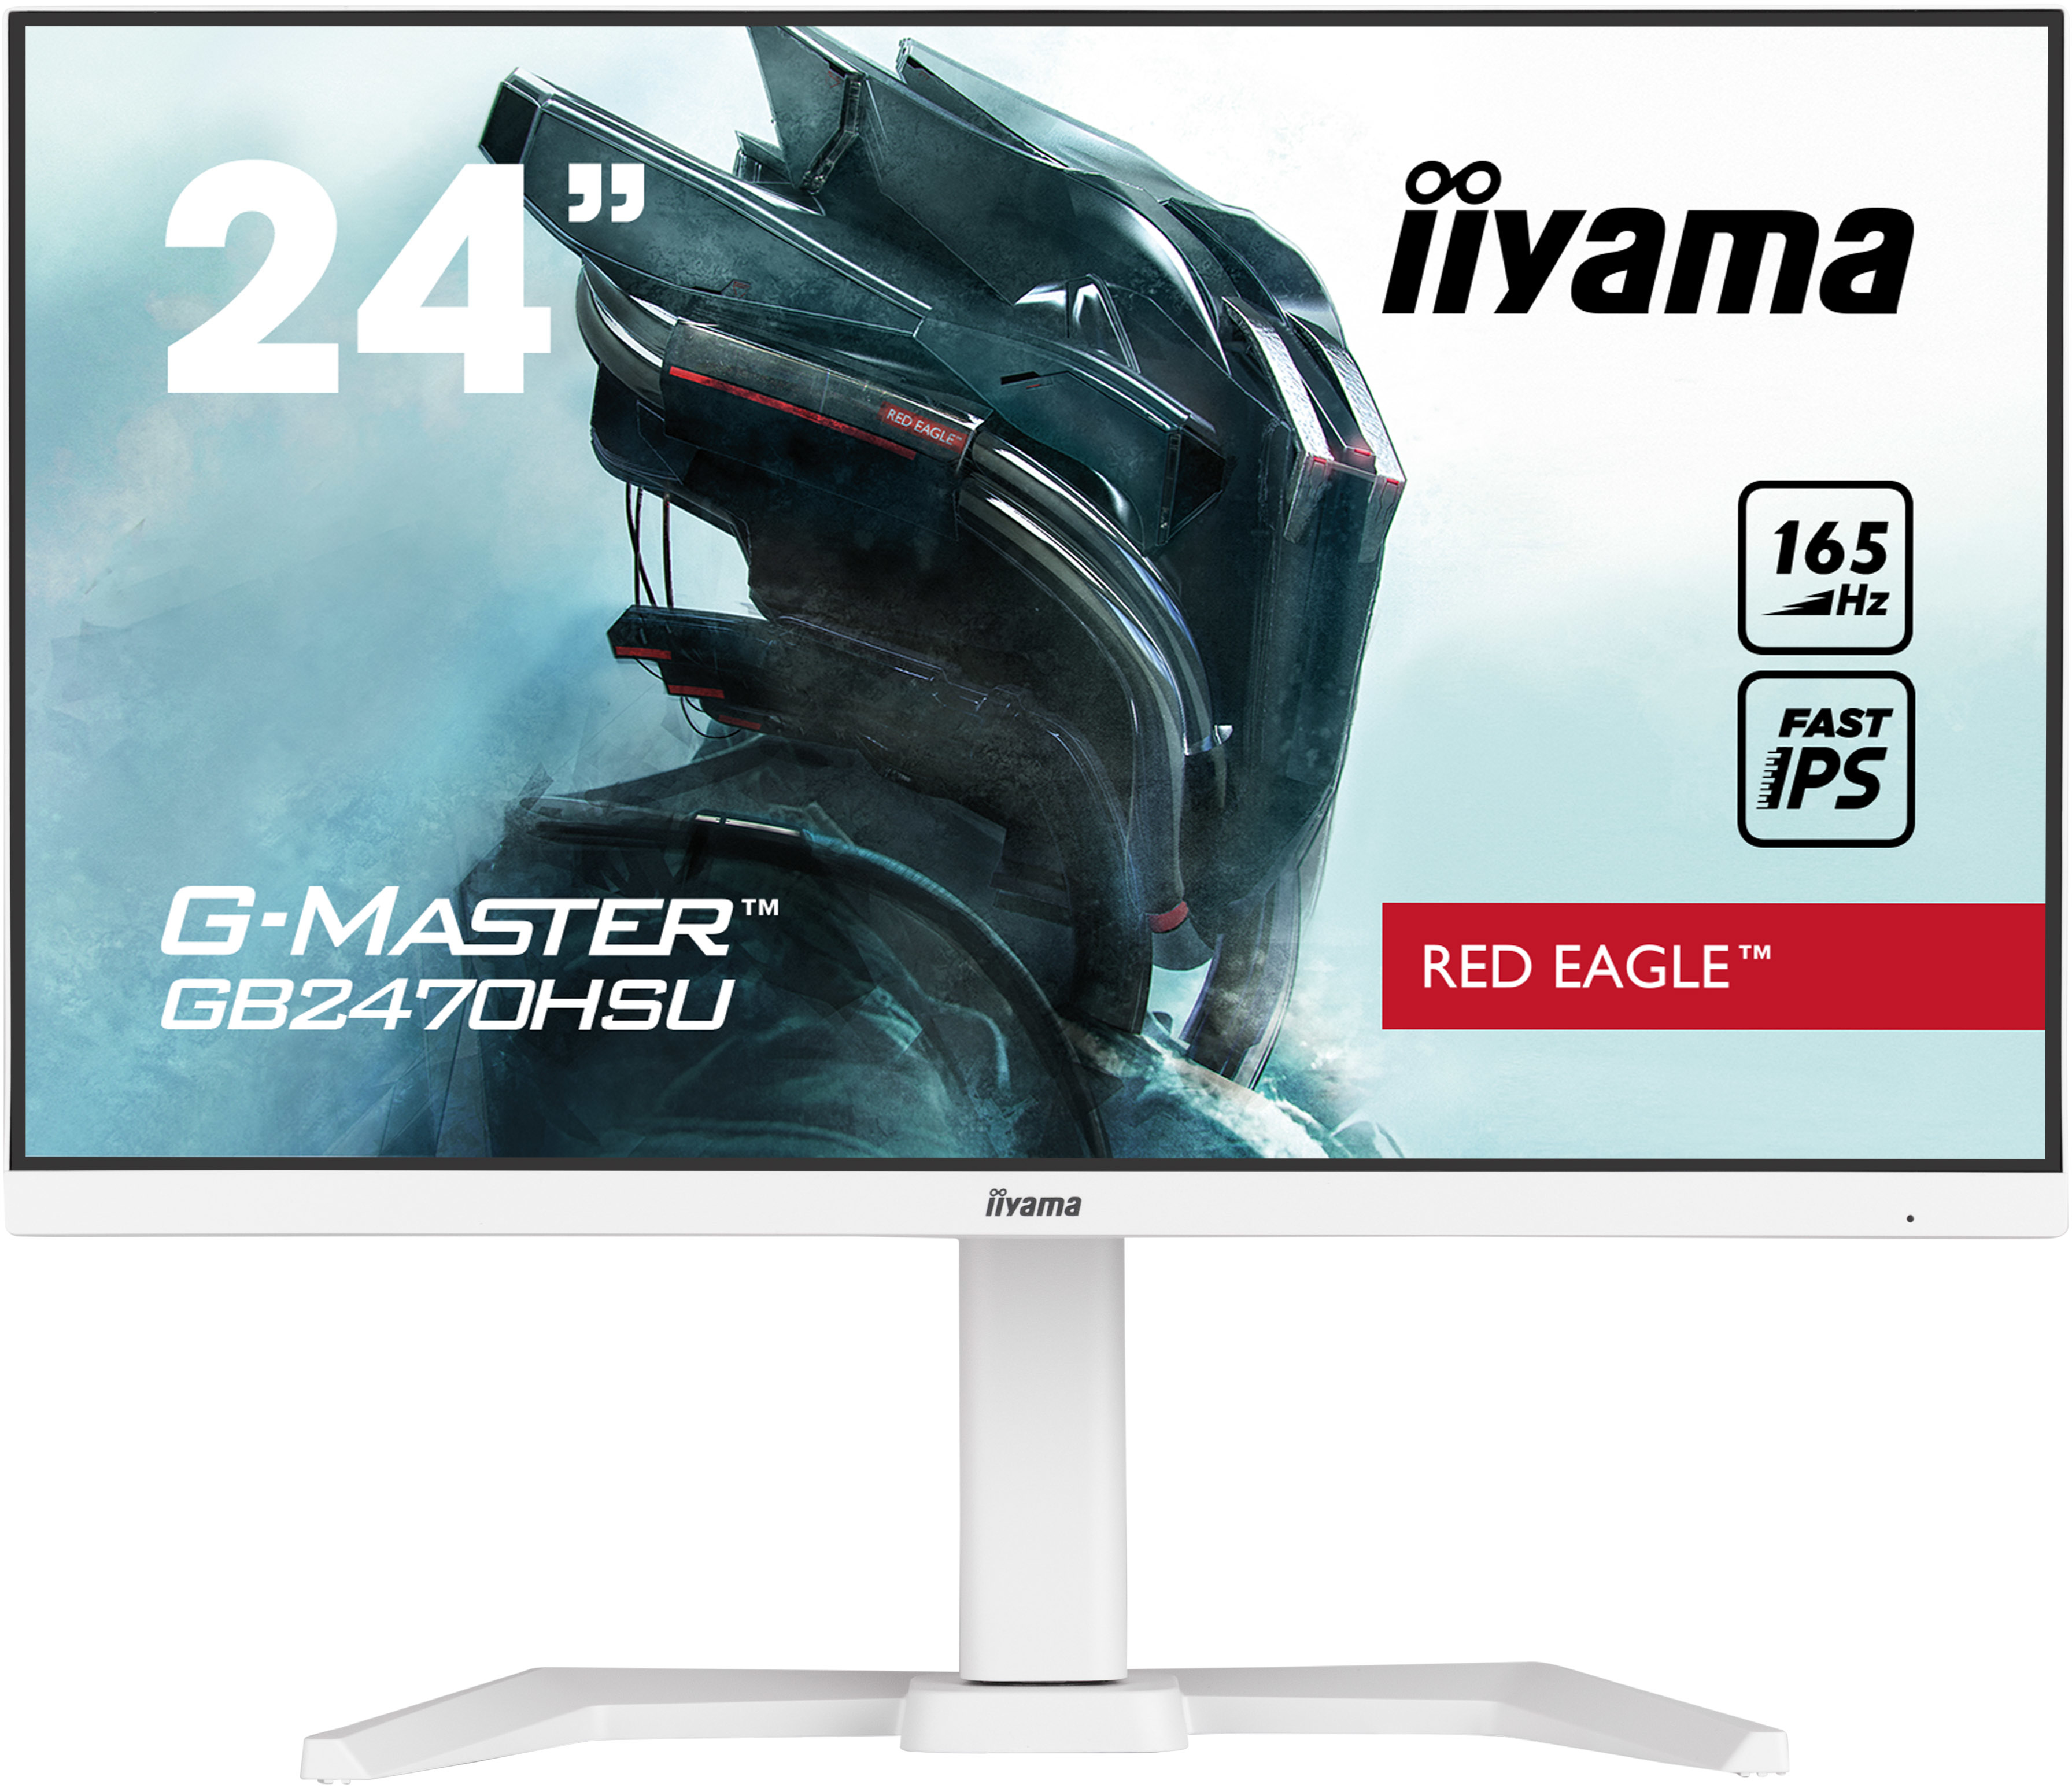 iiyama GB2470HSU-W5 computer monitor